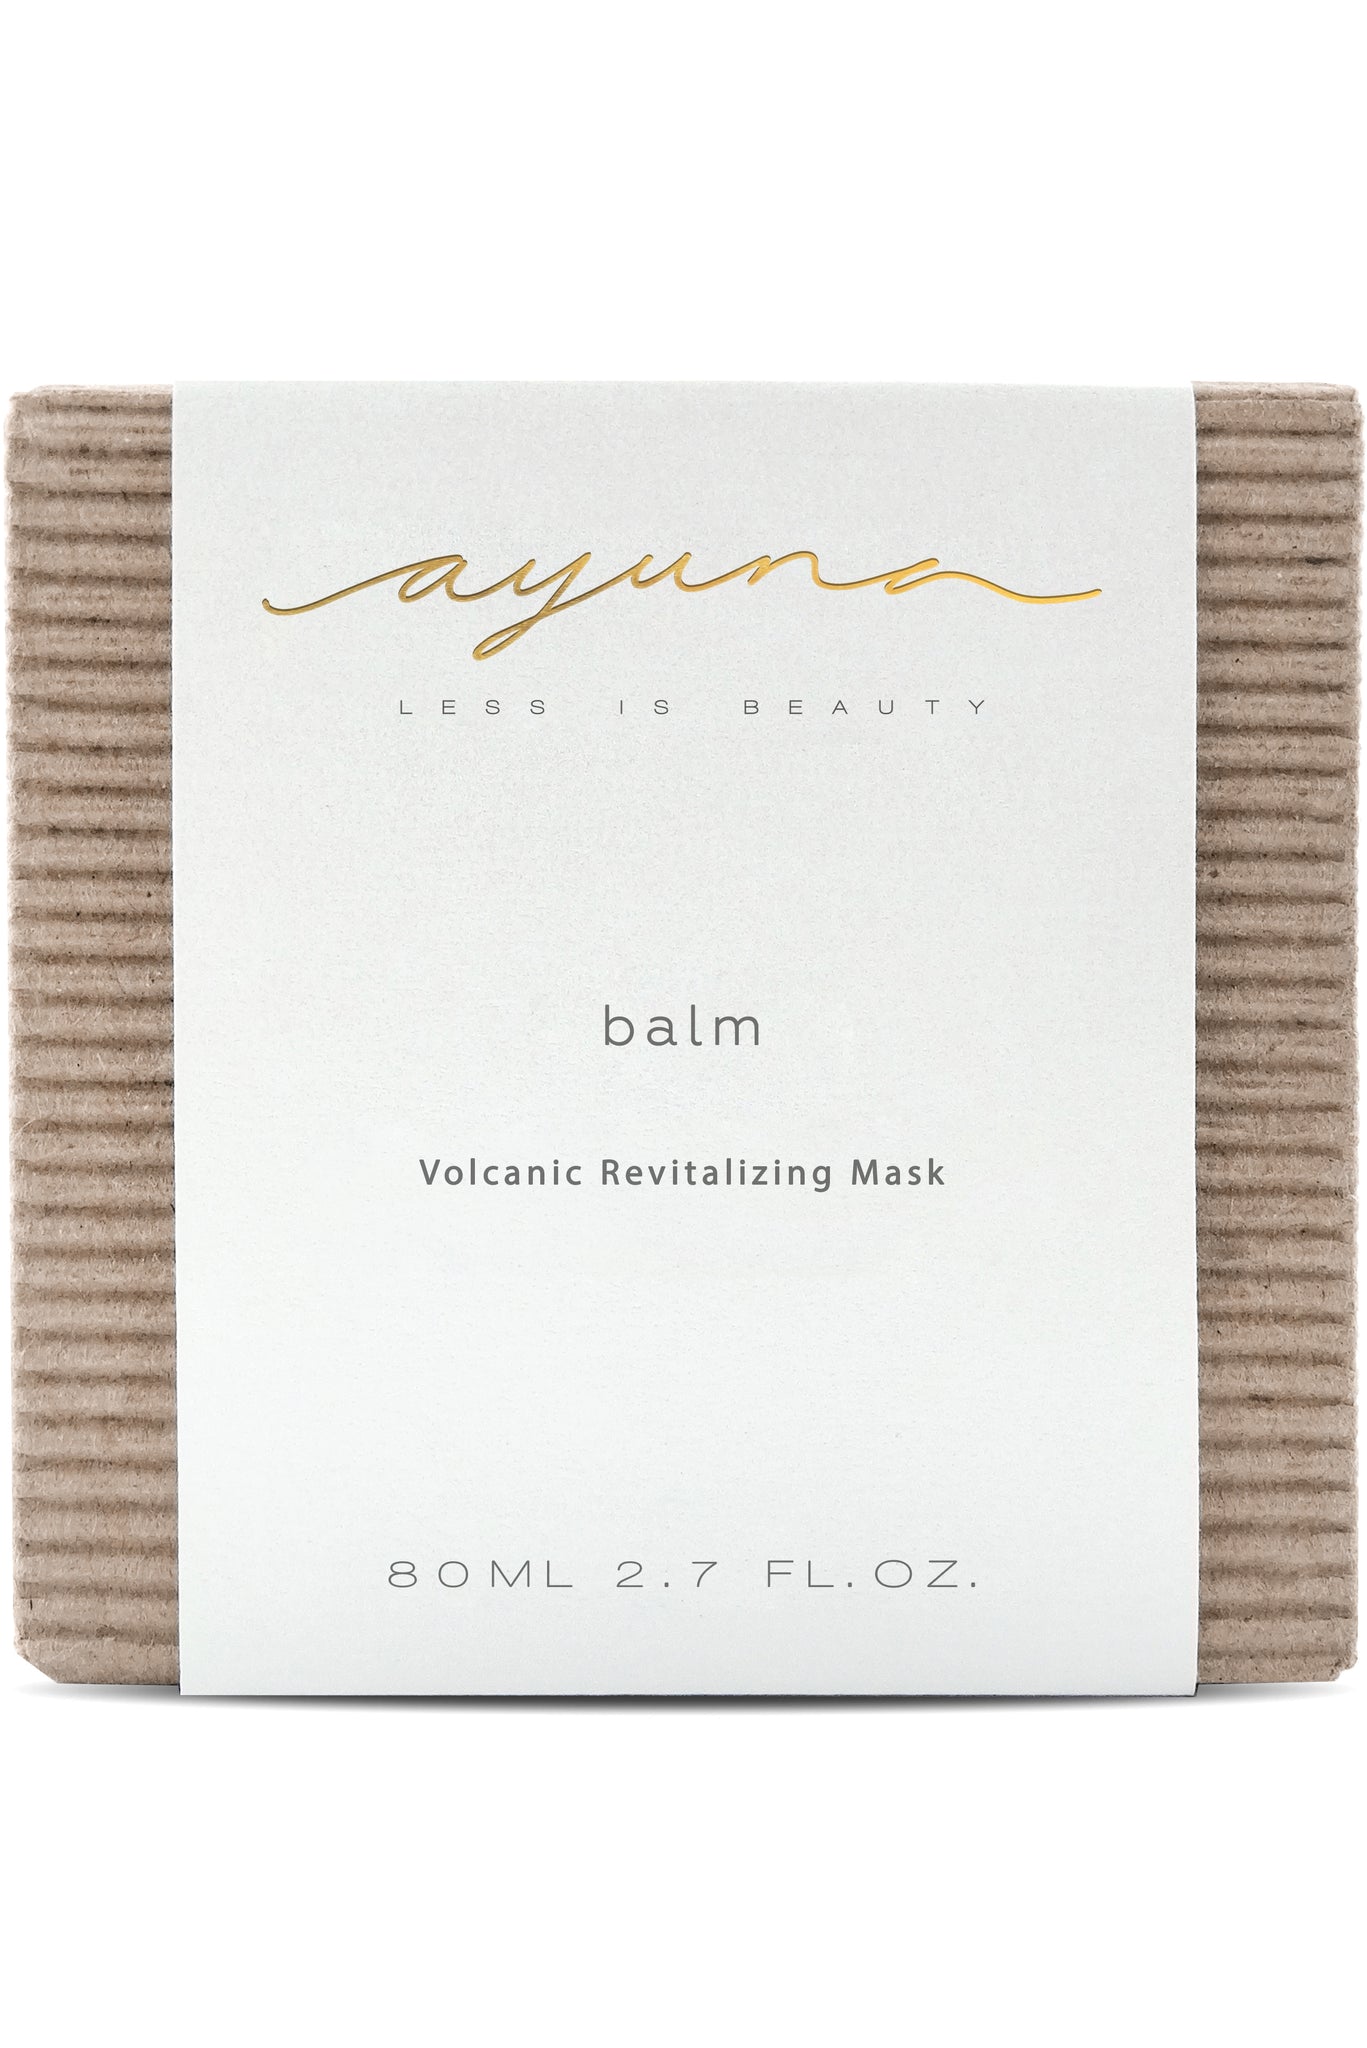 balm – Volcanic Revitalizing Mask